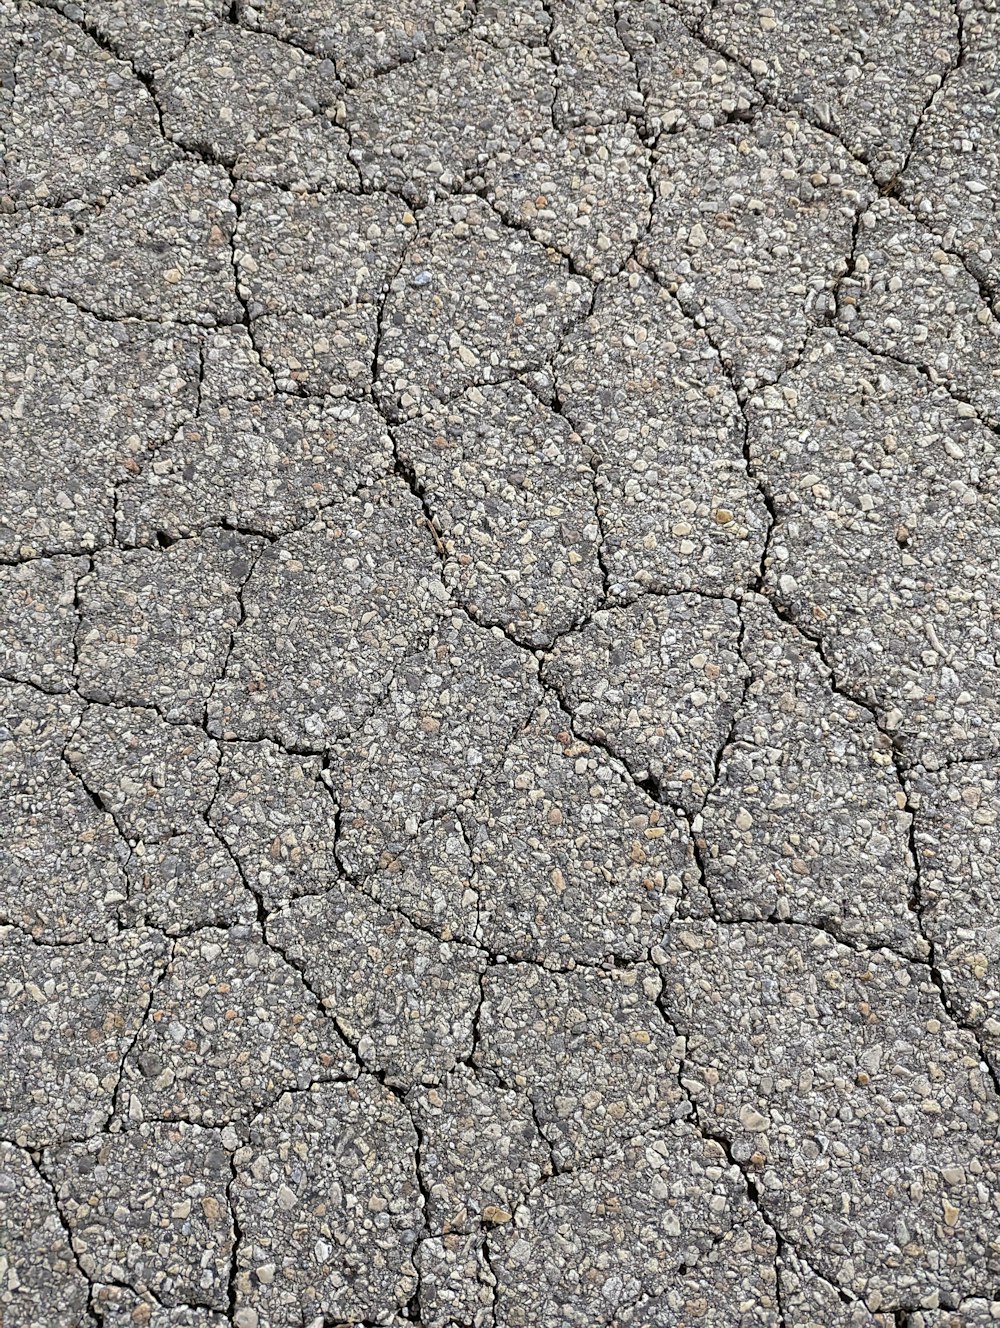 a close up of a cracked asphalt surface